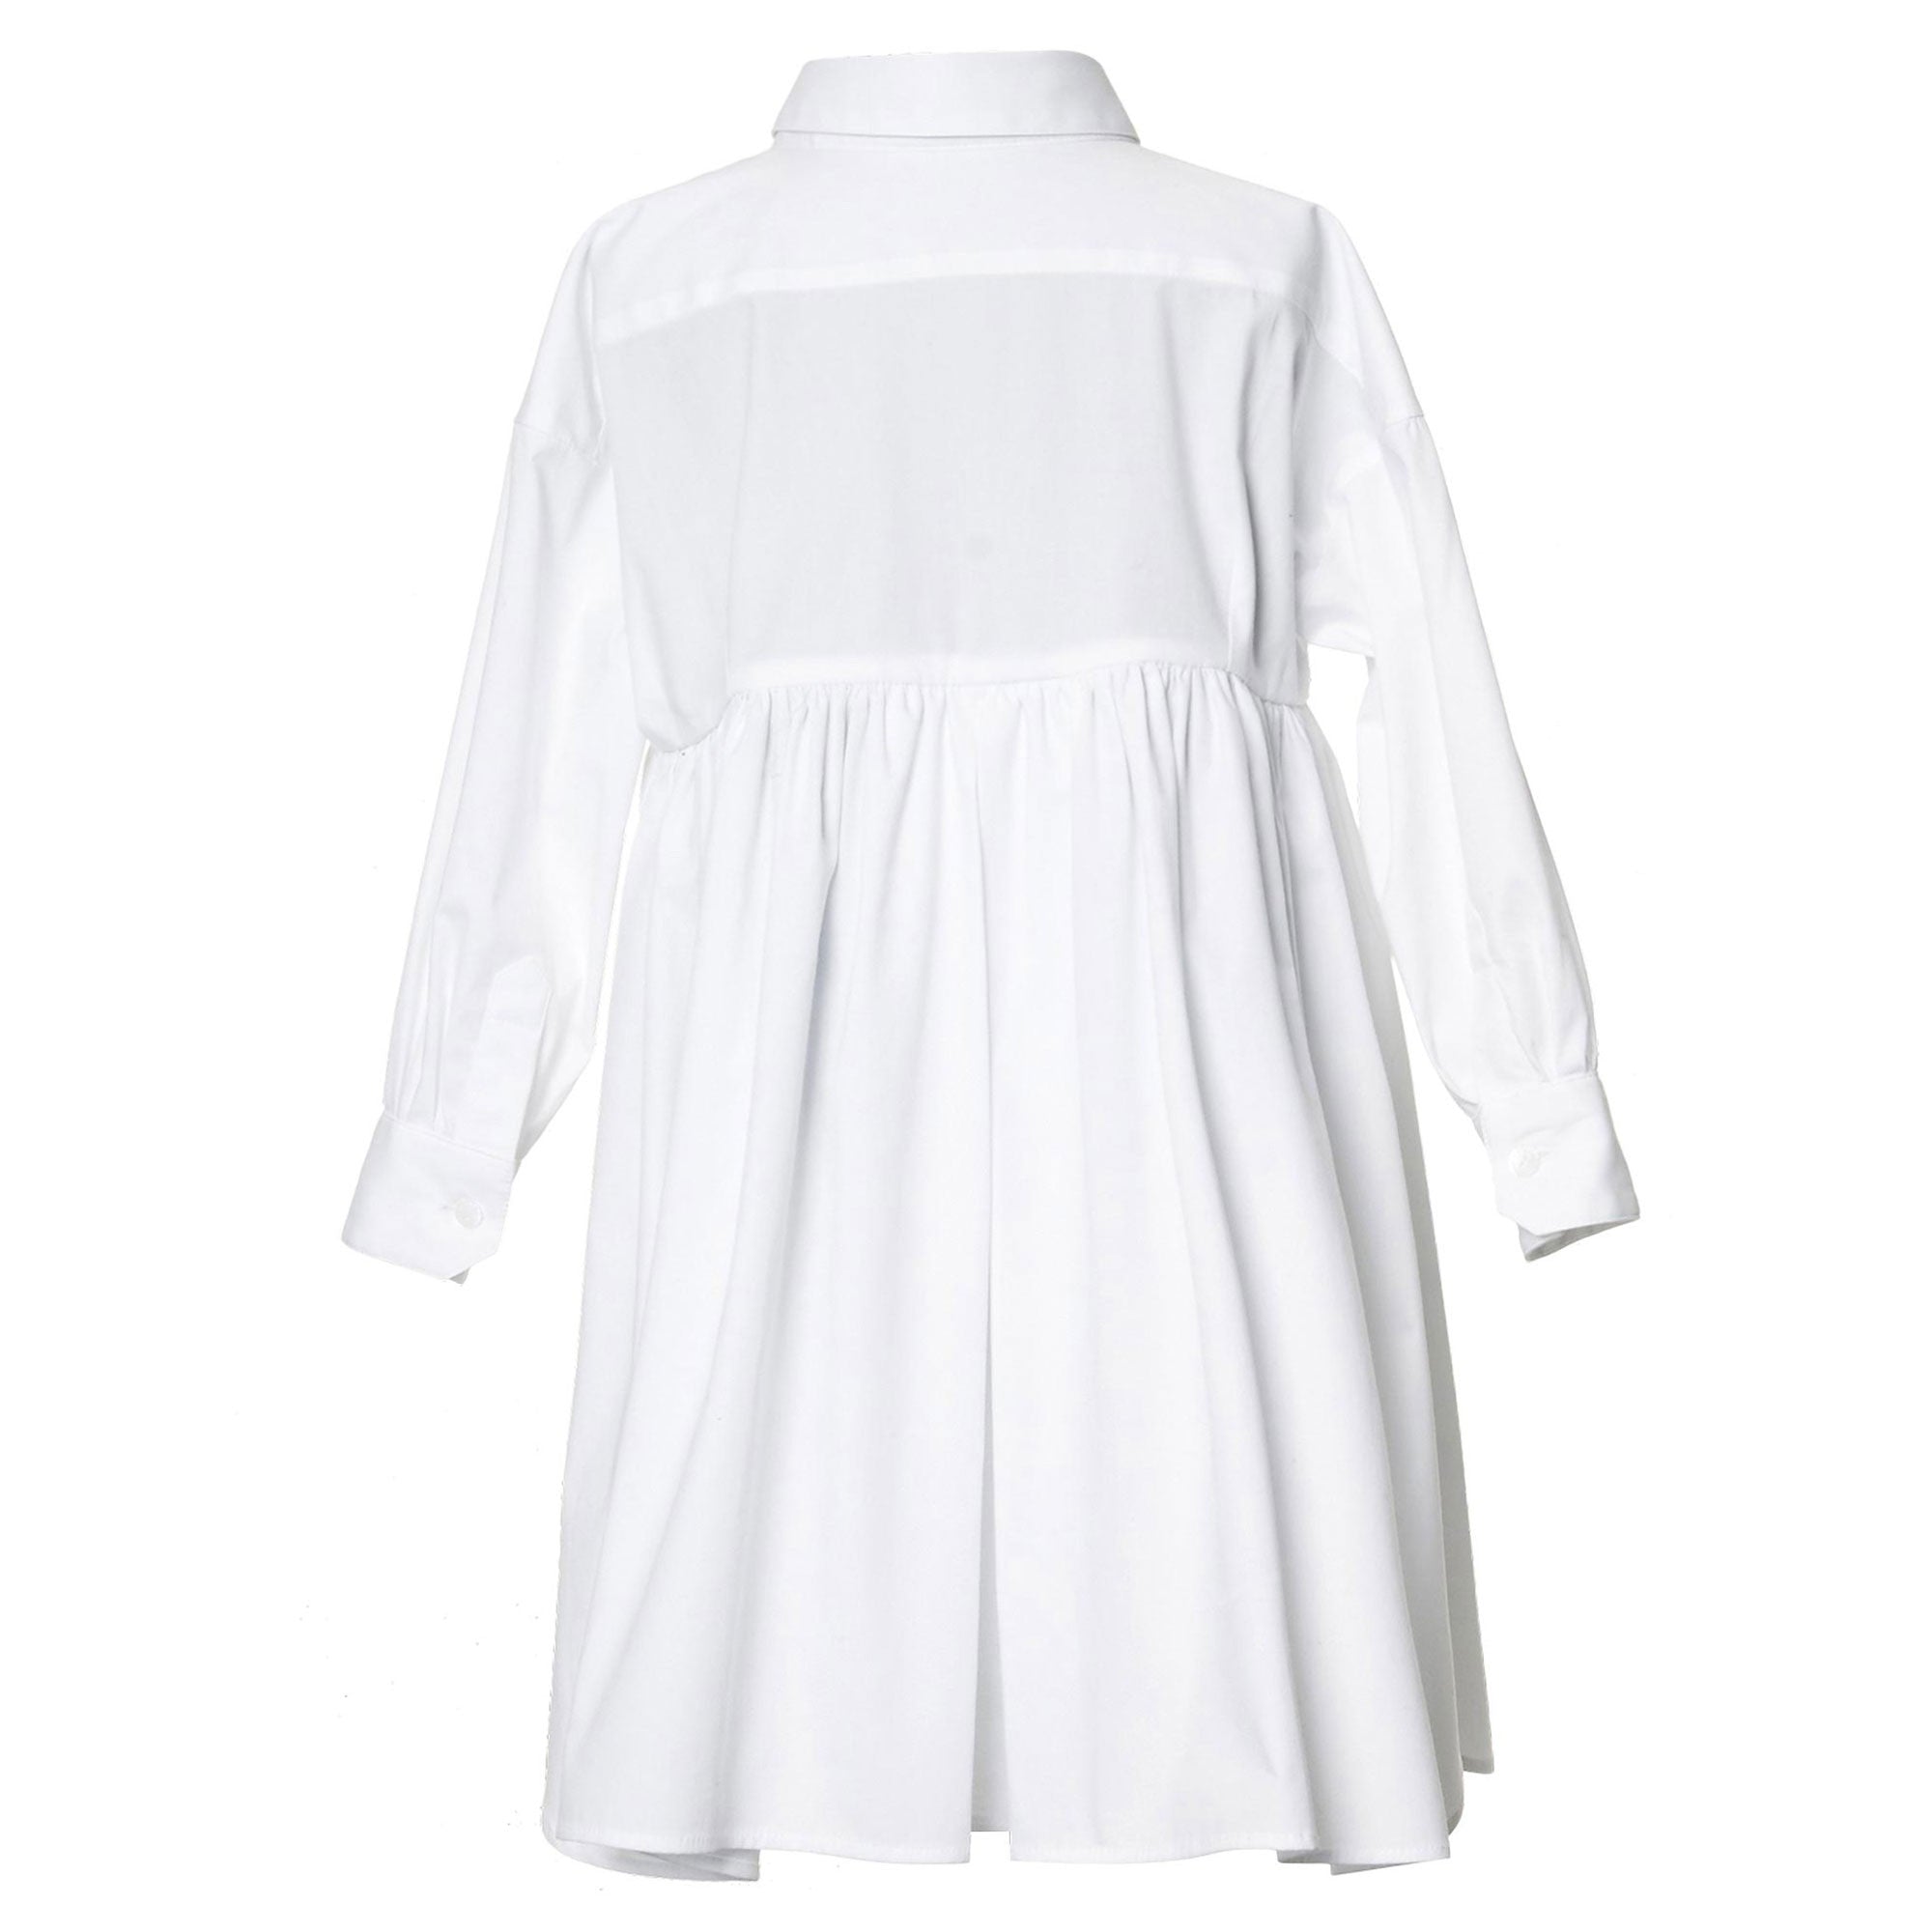 Girls White Bow Trims Cotton Dress - CÉMAROSE | Children's Fashion Store - 2